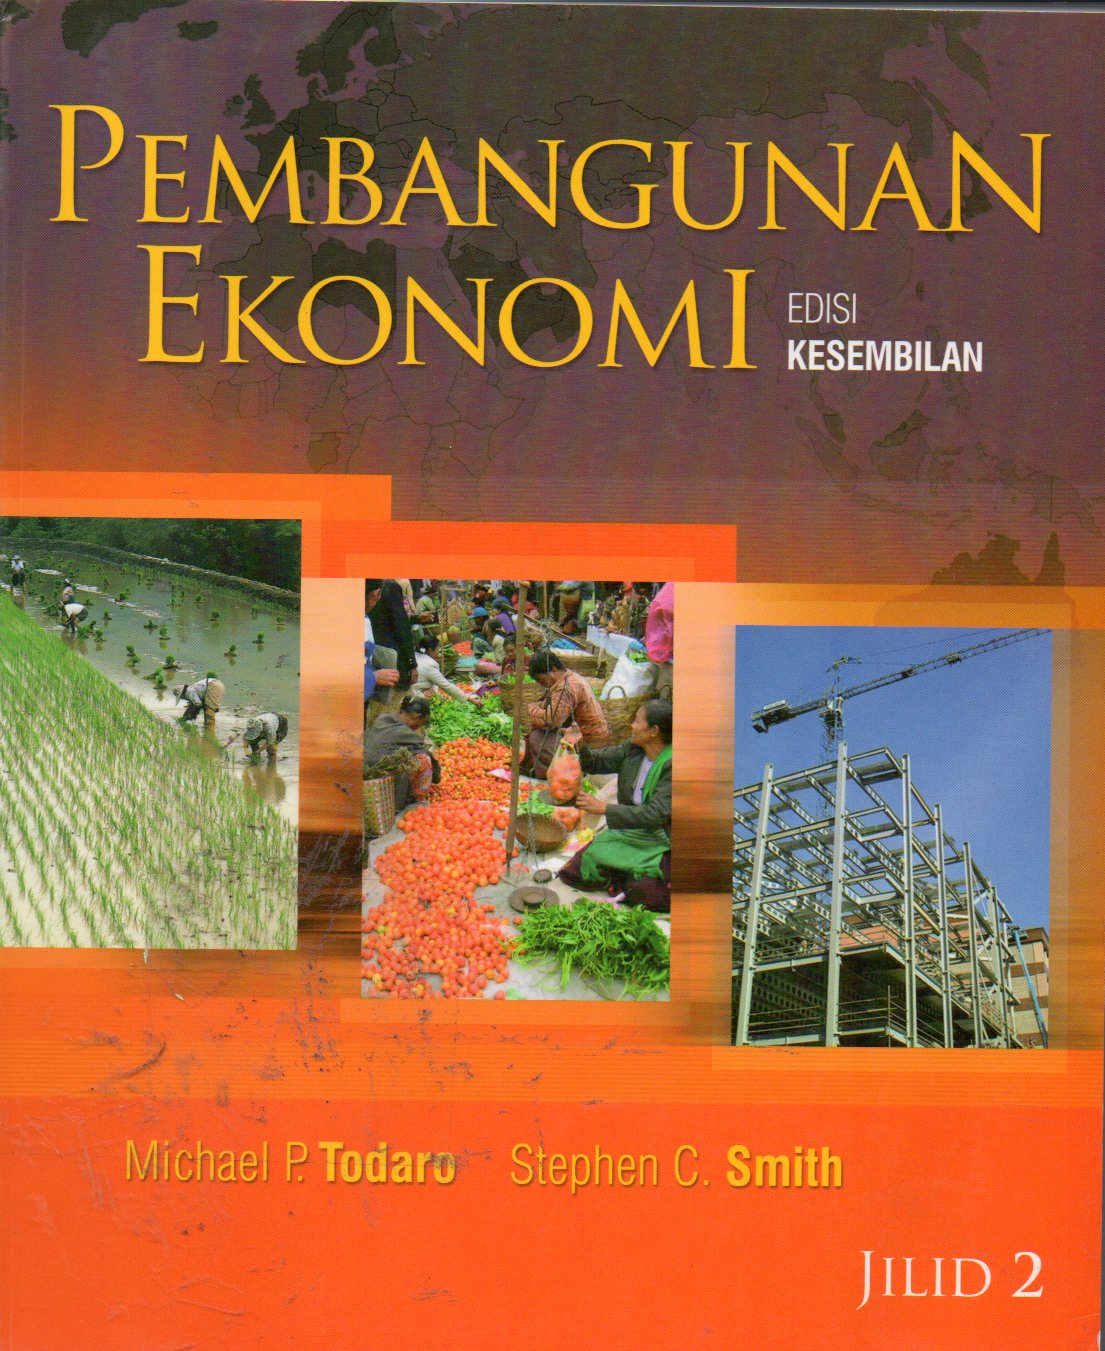 Pembangunan Ekonomi Jilid 2, Edisi Kesembilan